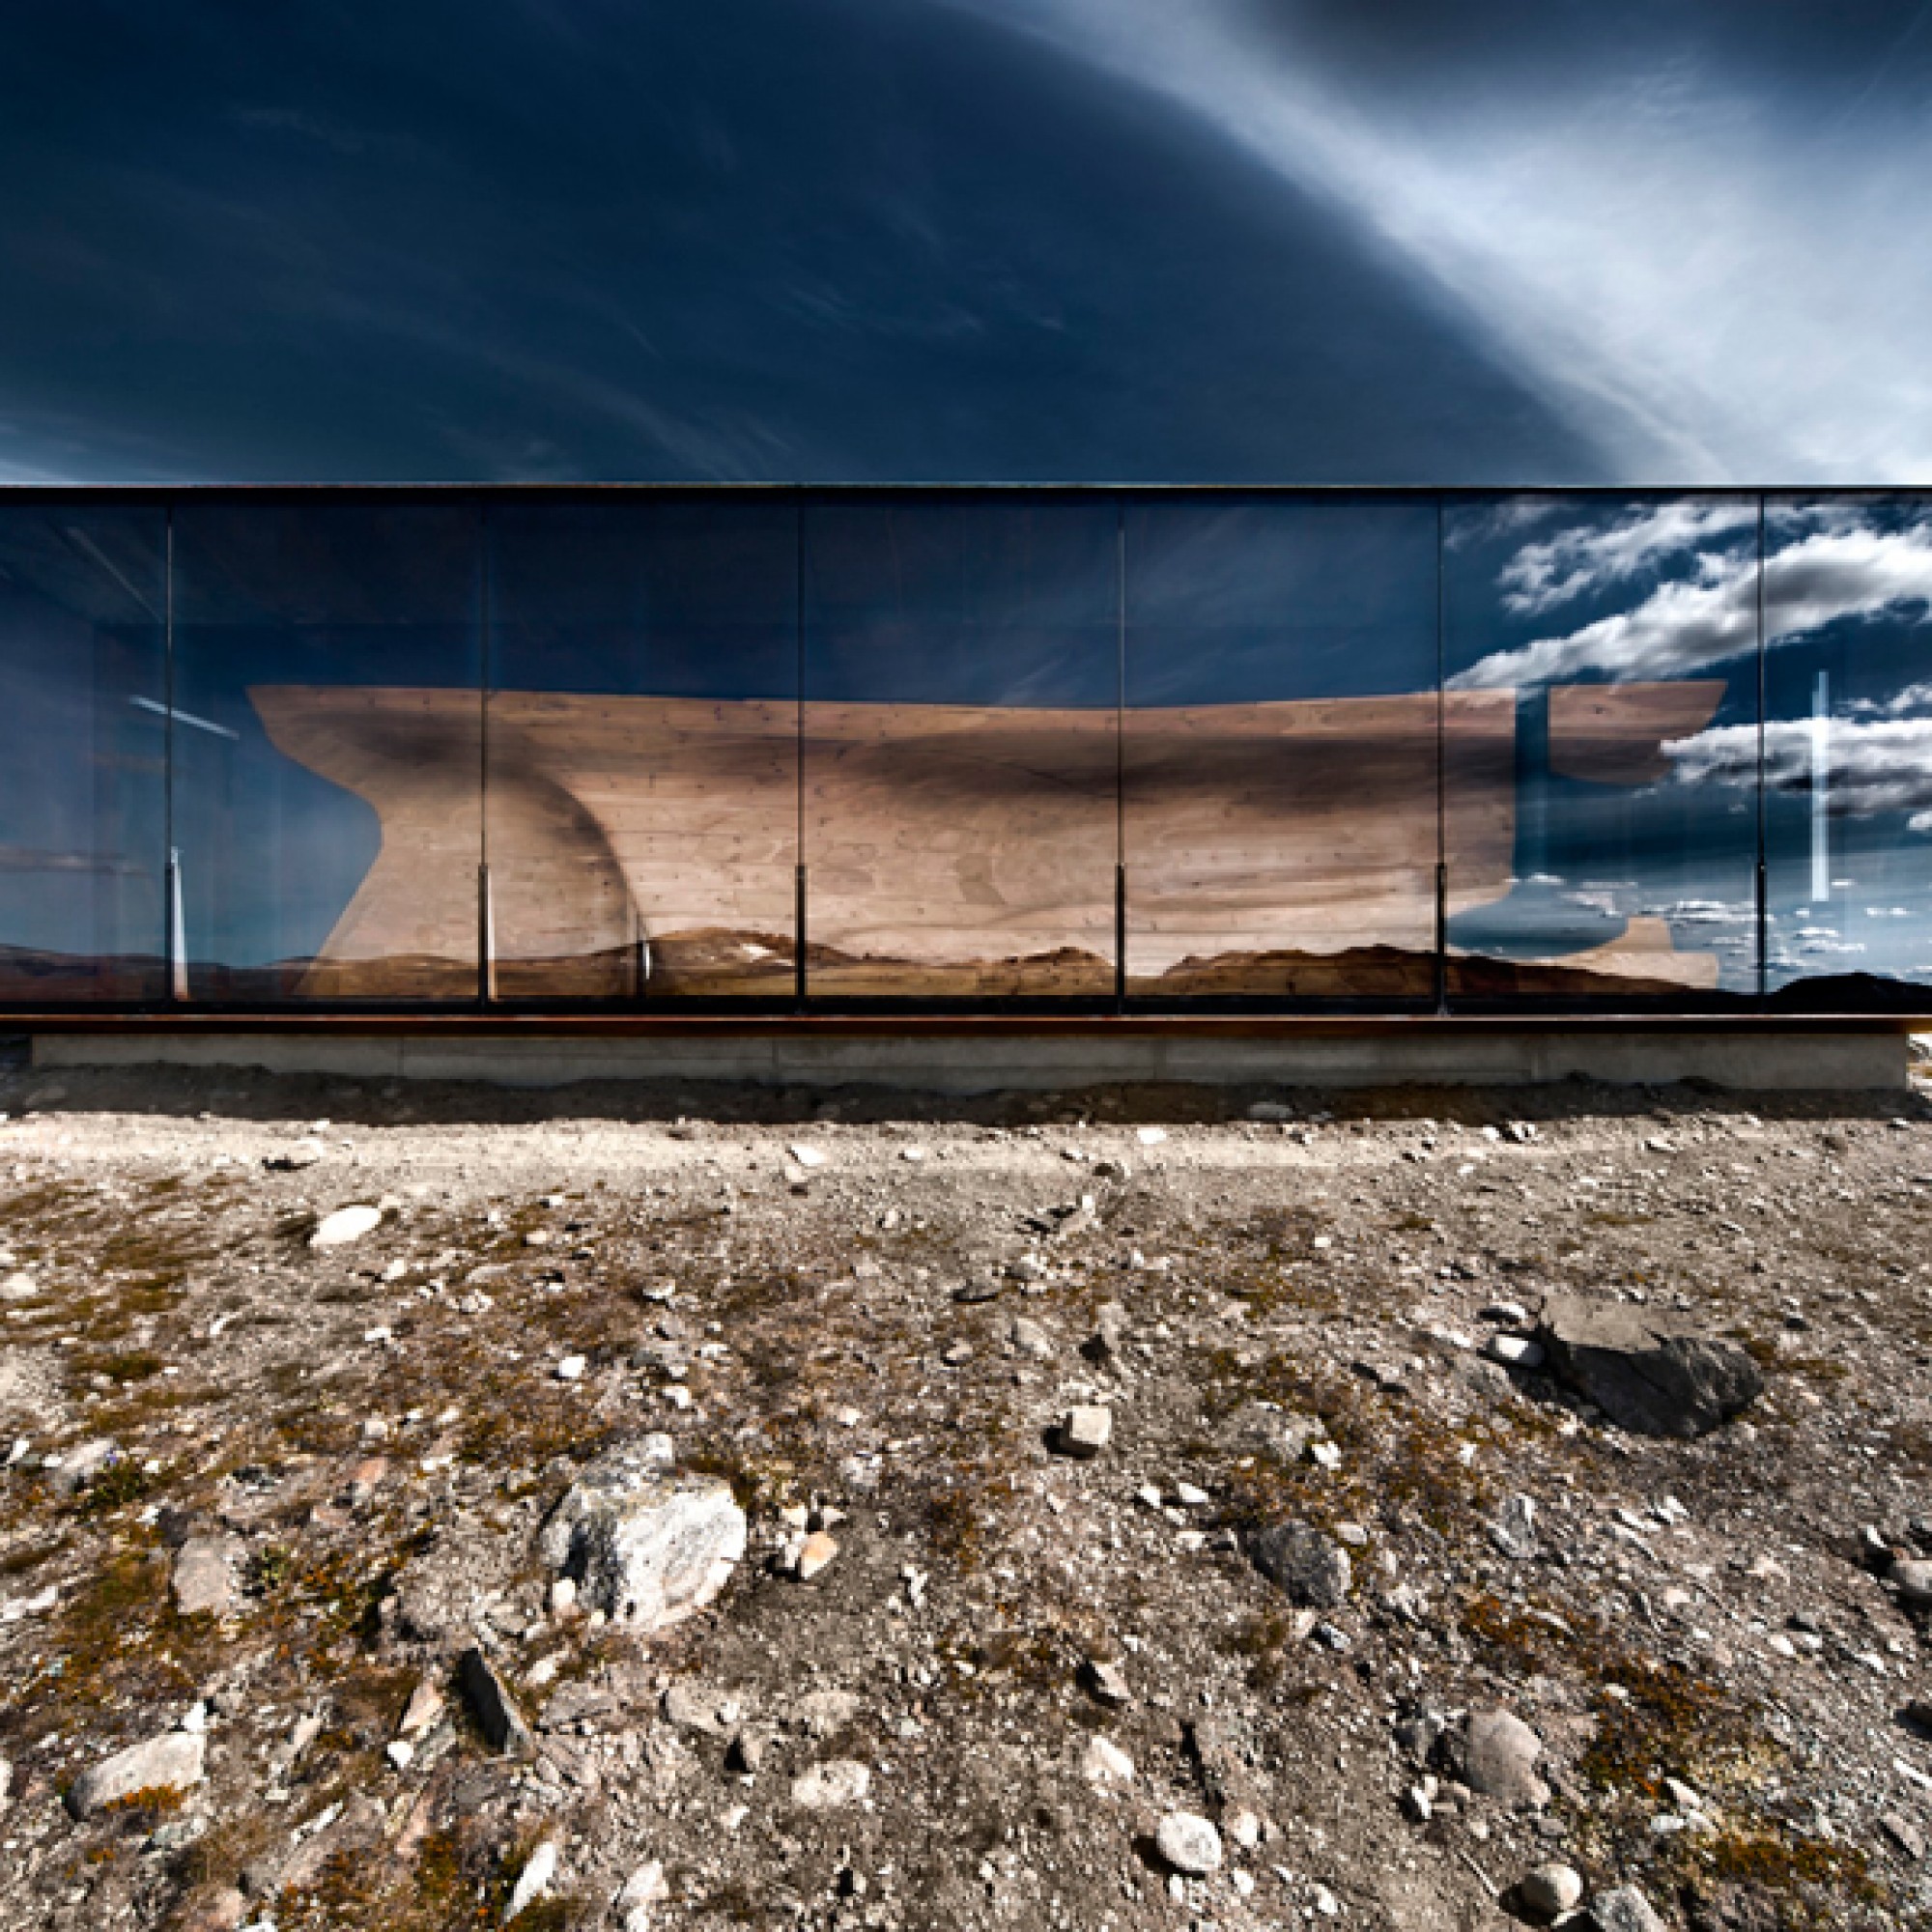 Erster Preis: Aussichtspavillon Tverrfjellhytta im norwegischen Dovrefjell National Park. Architekturbüro: Snøhetta. (zvg)